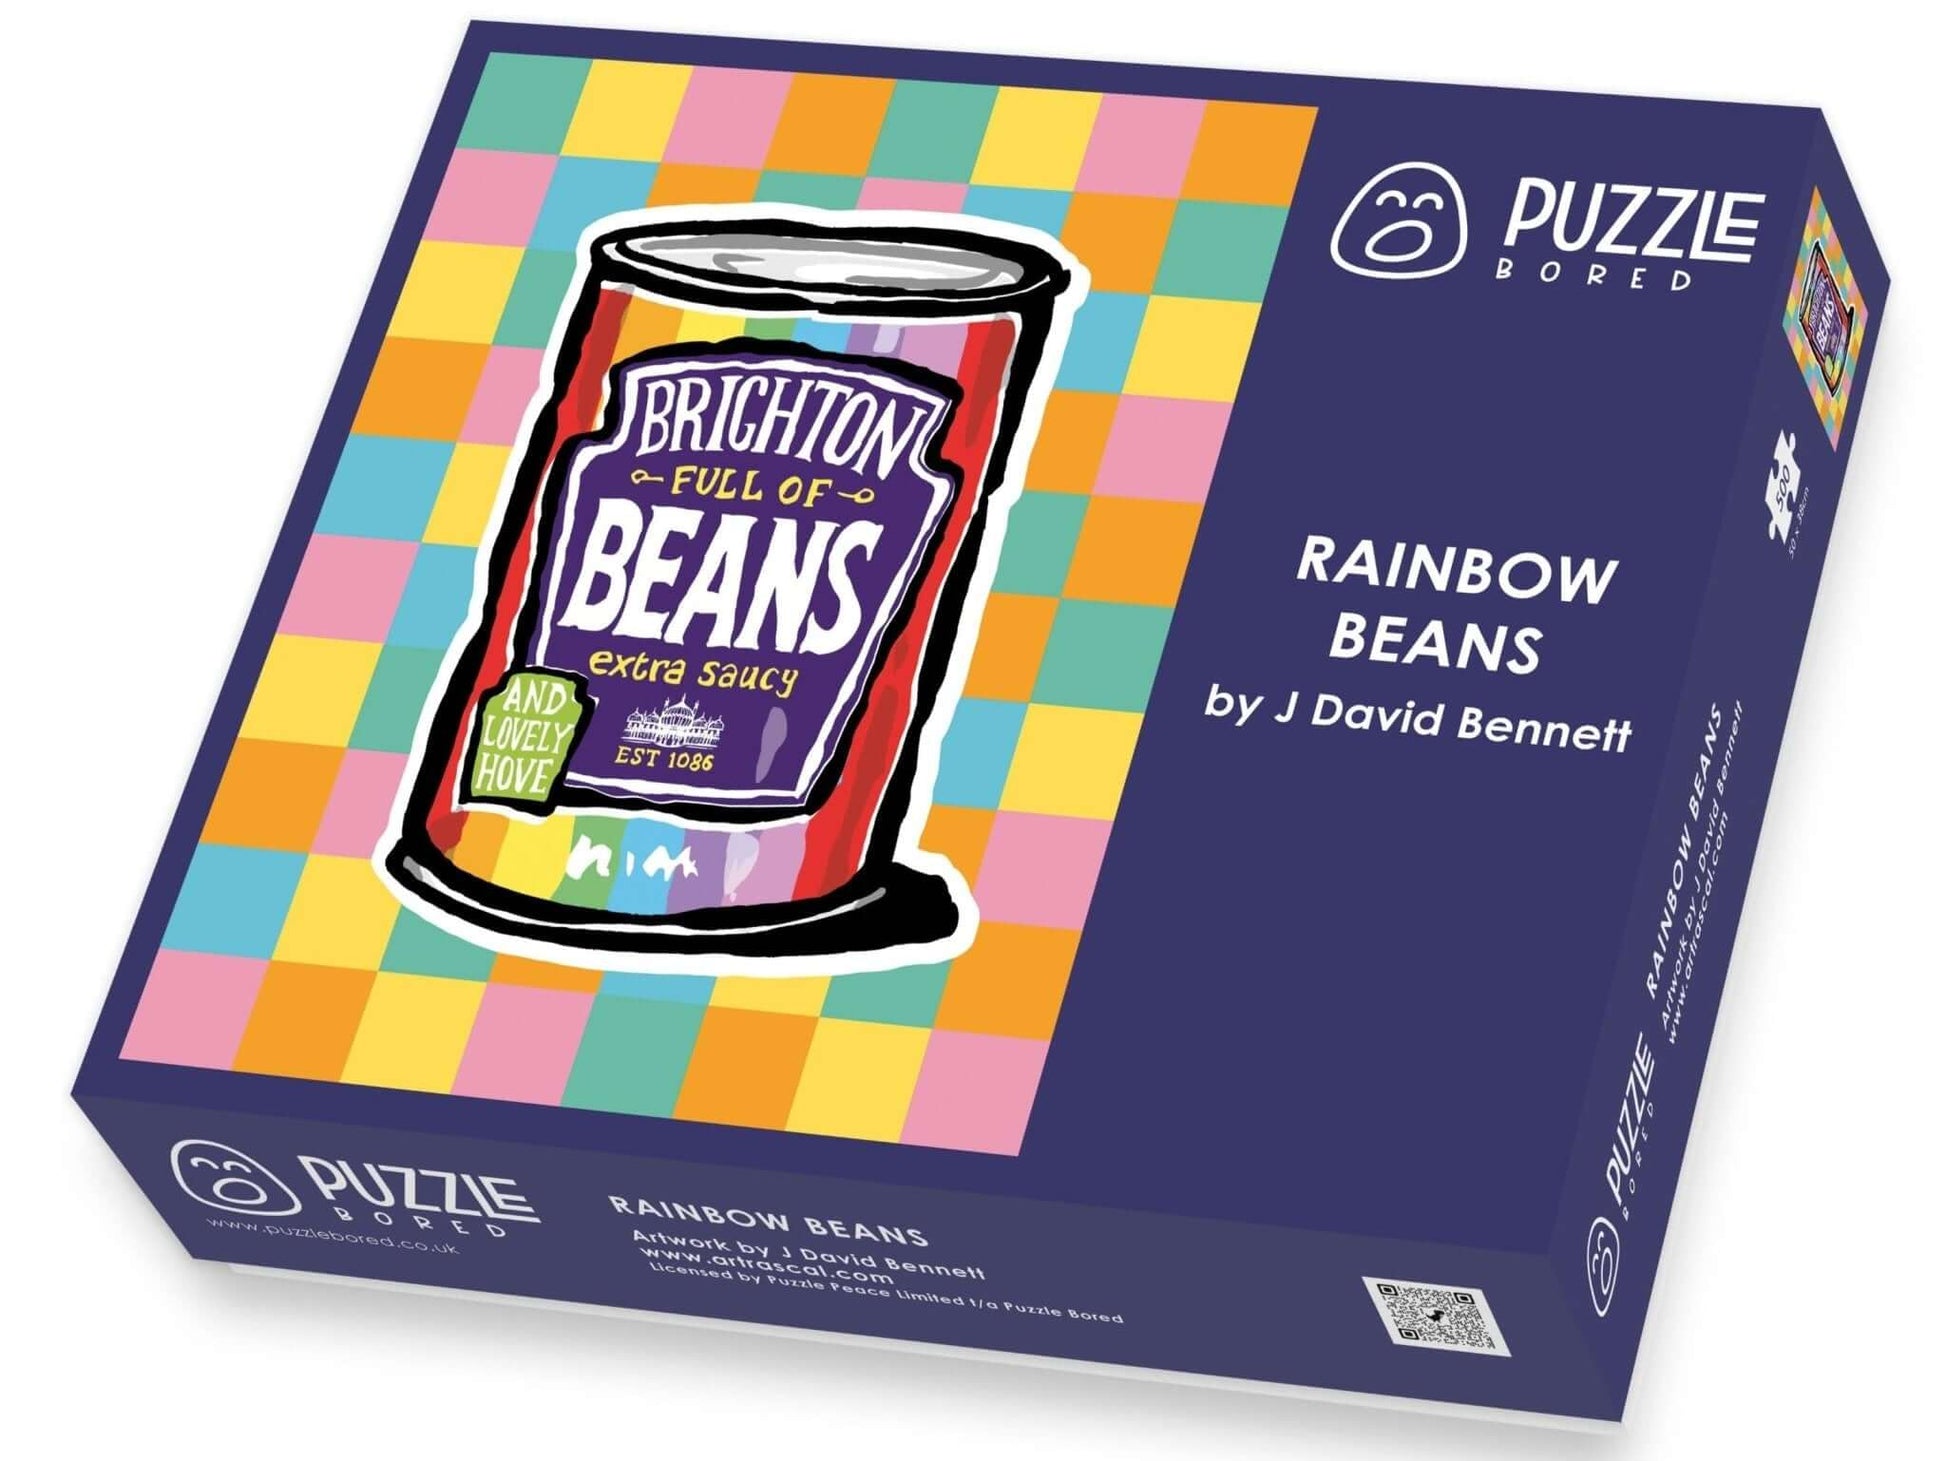 Rainbow Beans by J David Bennett - Puzzle Bored